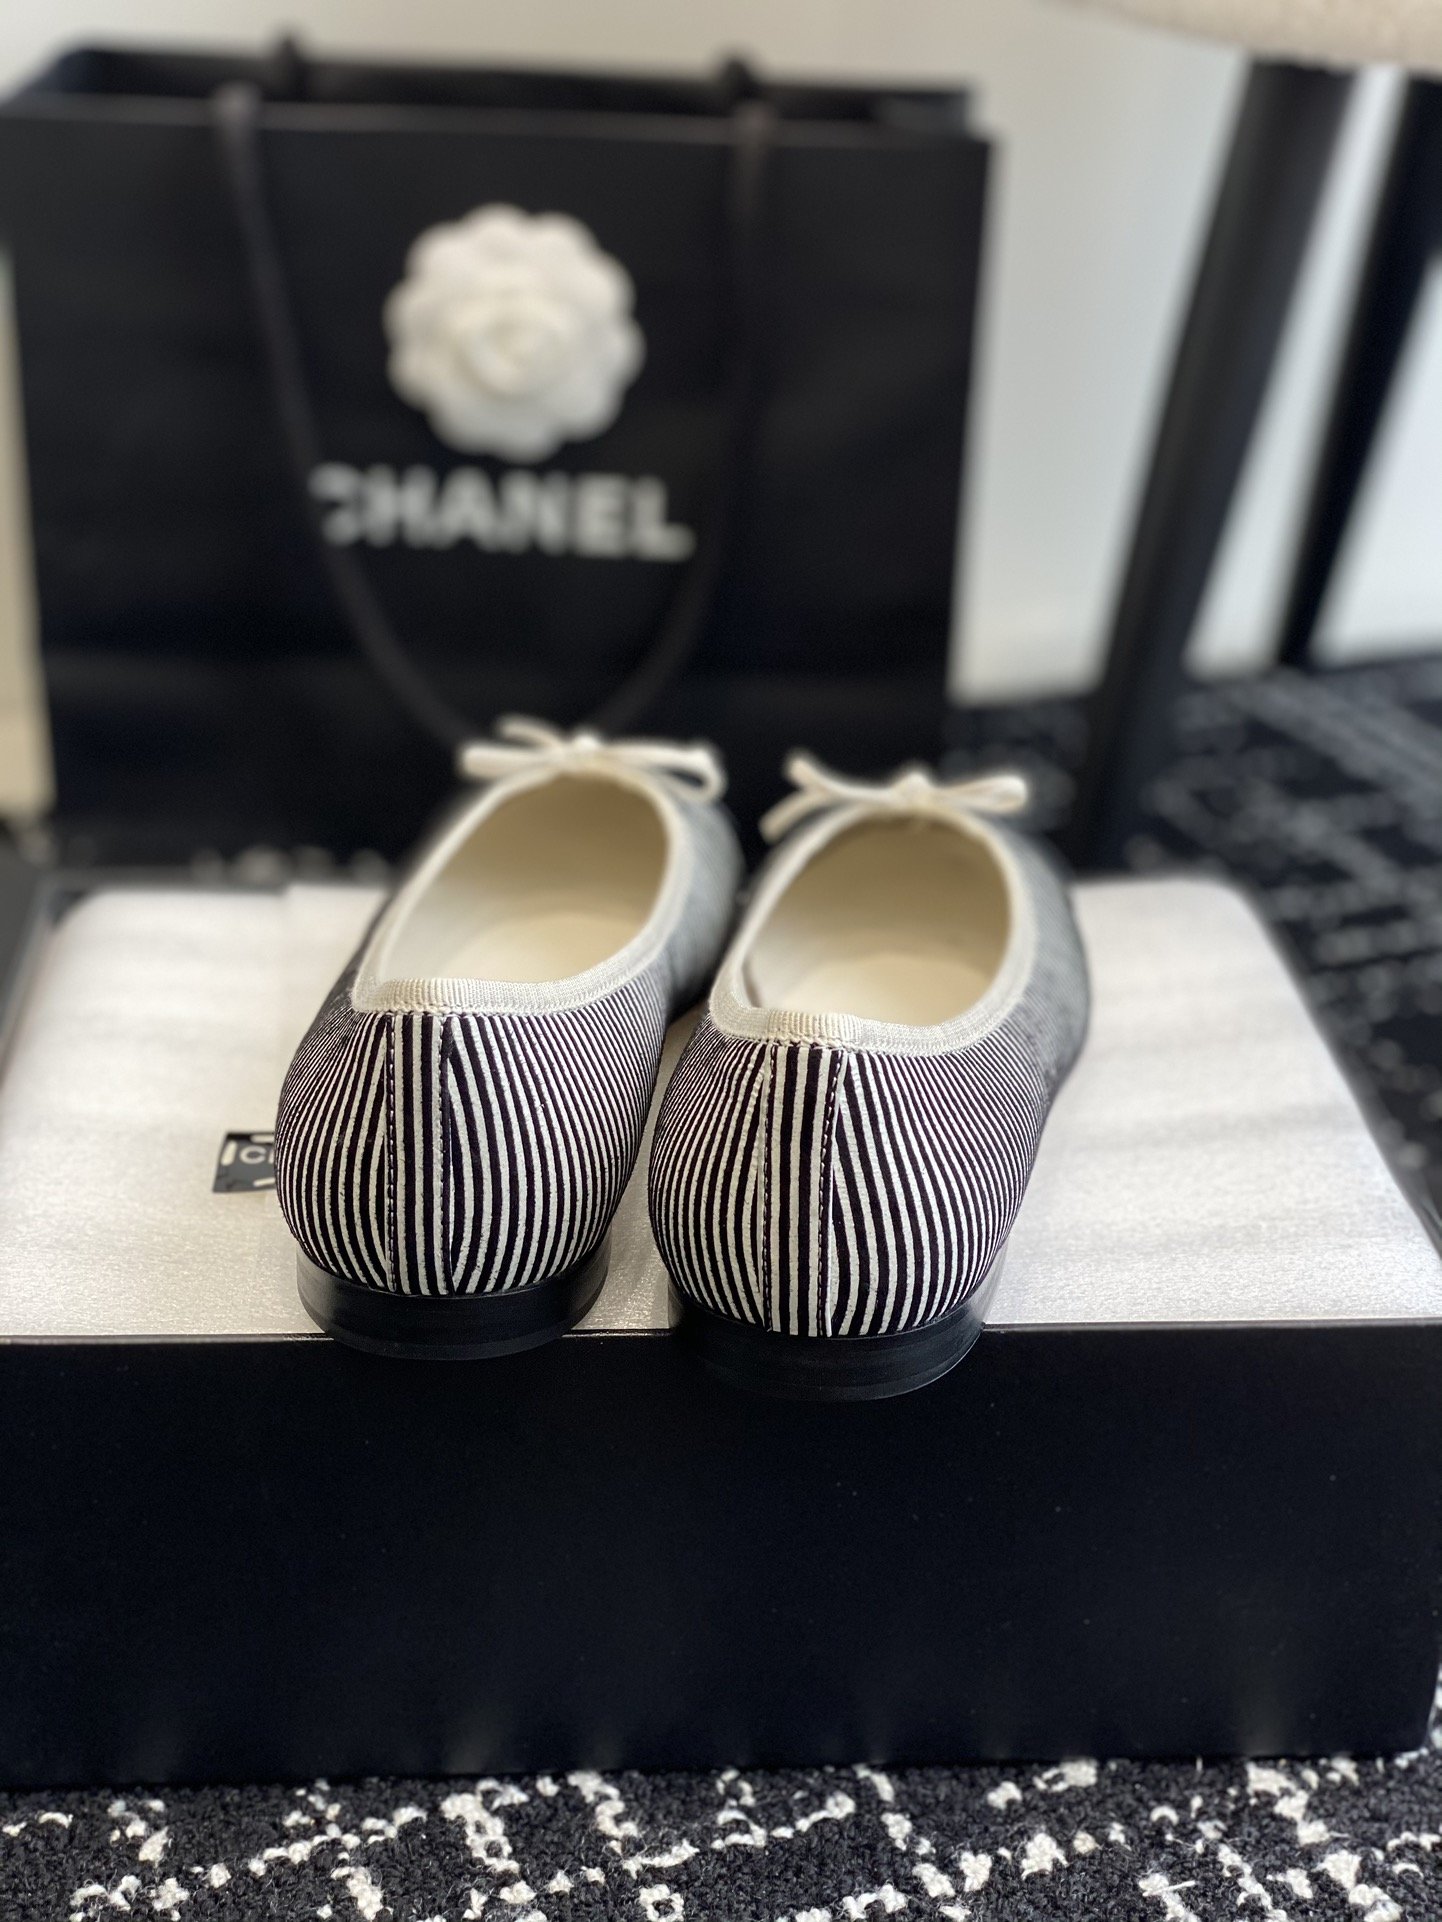 Chanel23芭蕾舞单鞋原版1:1切割而成Chanel香奈儿万年经典蝴蝶结圆头芭蕾舞鞋好品质不多真正做